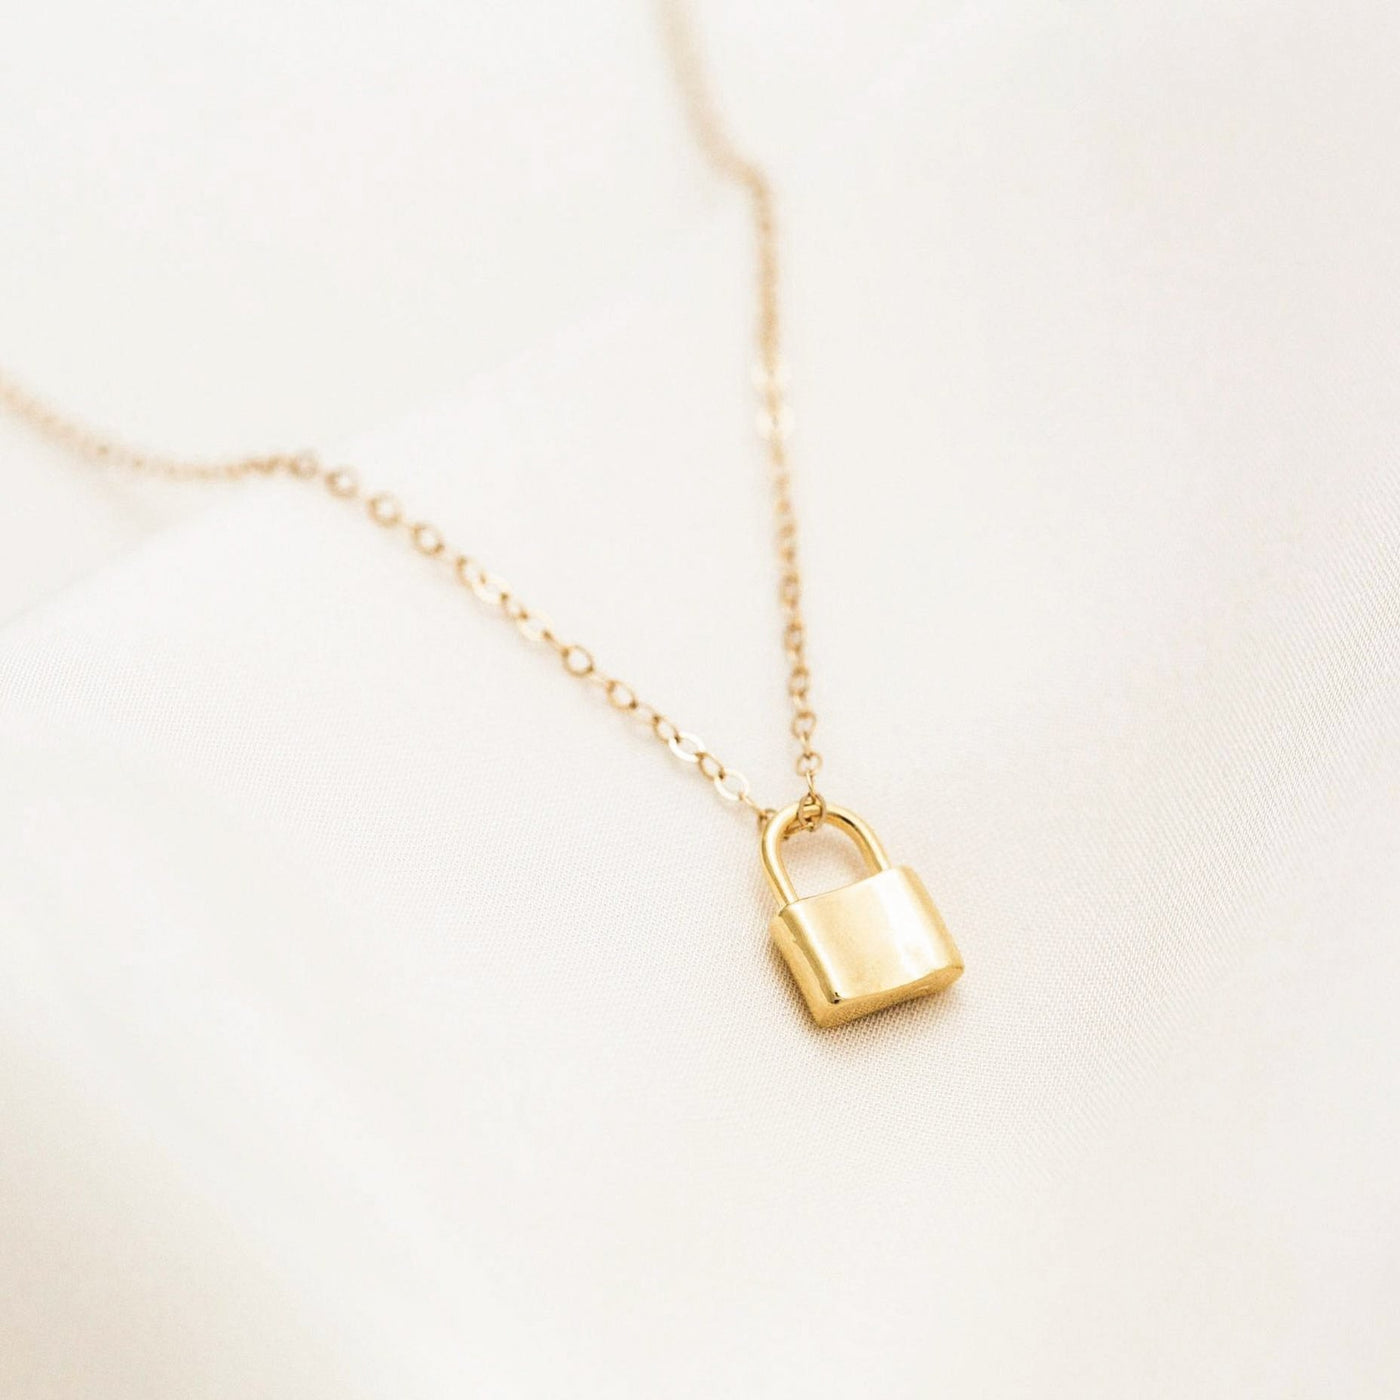 Tiny Lock Necklace by Simple & Dainty Jewelry